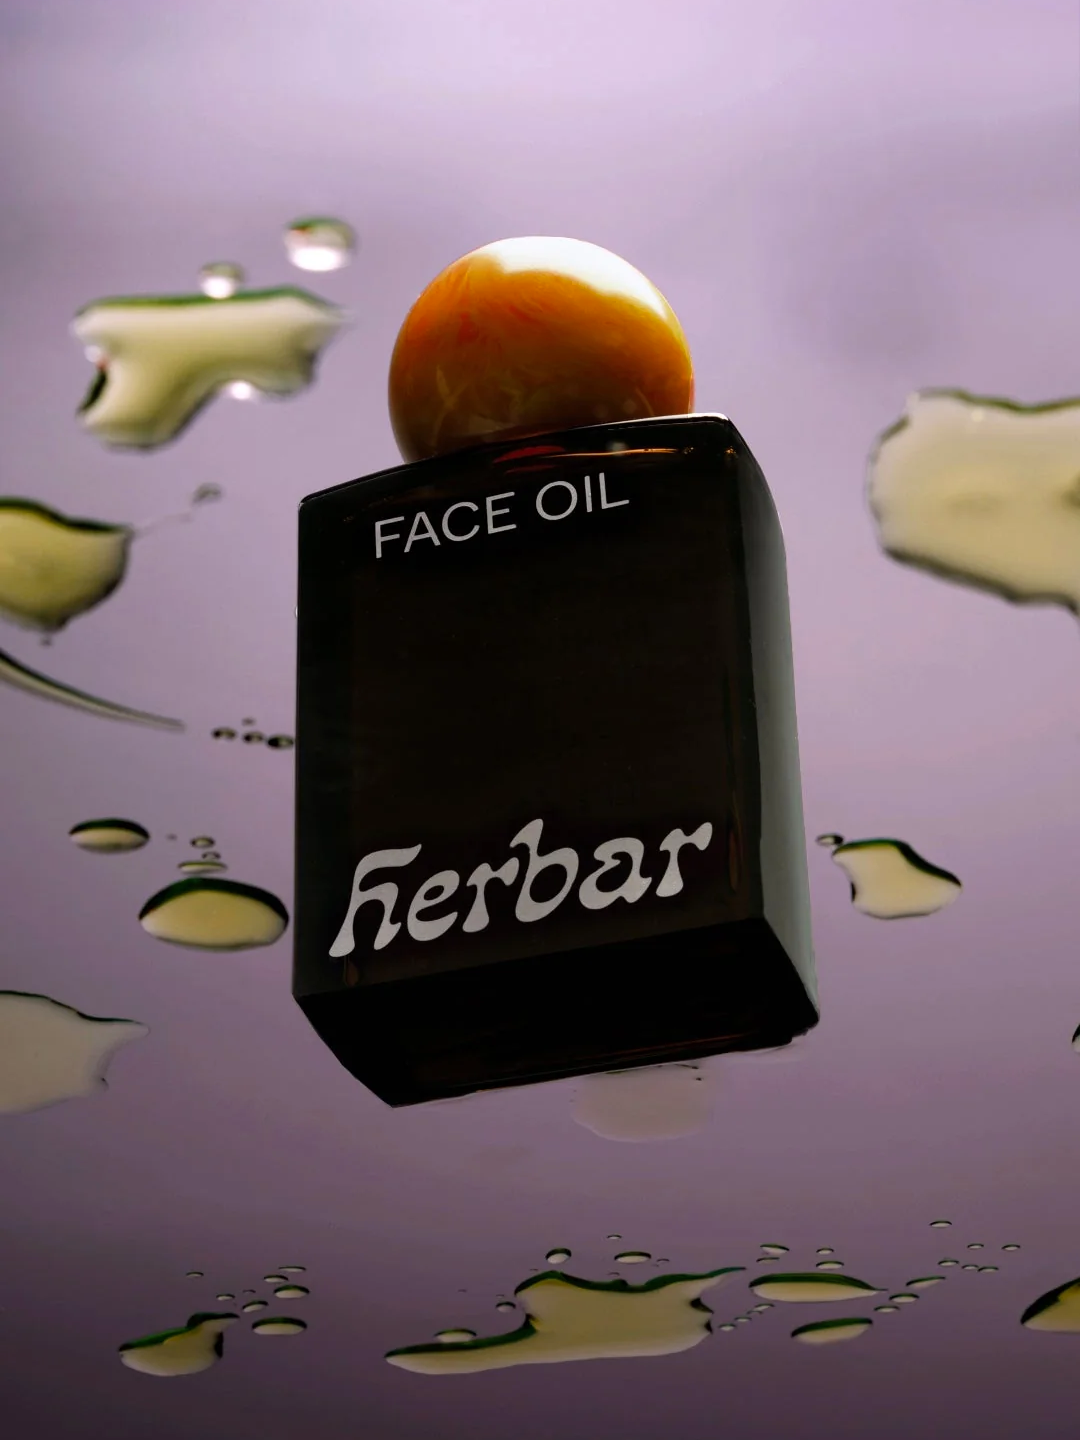 HERBAR Face Oil